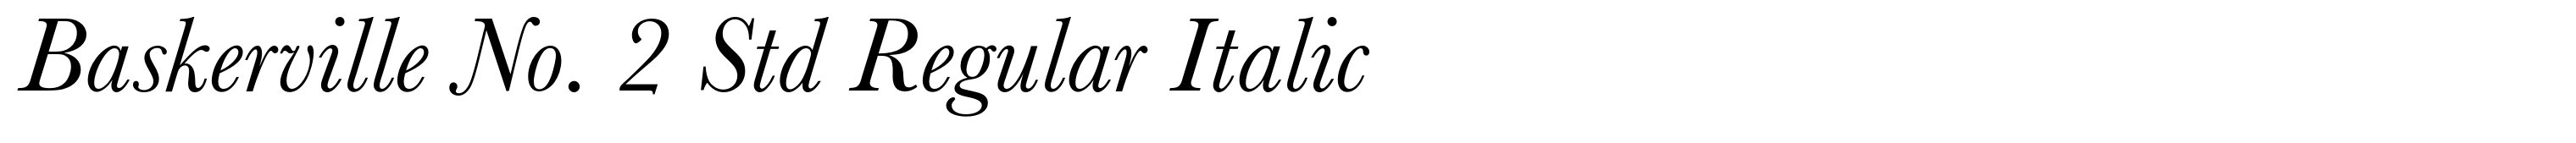 Baskerville No. 2 Std Regular Italic